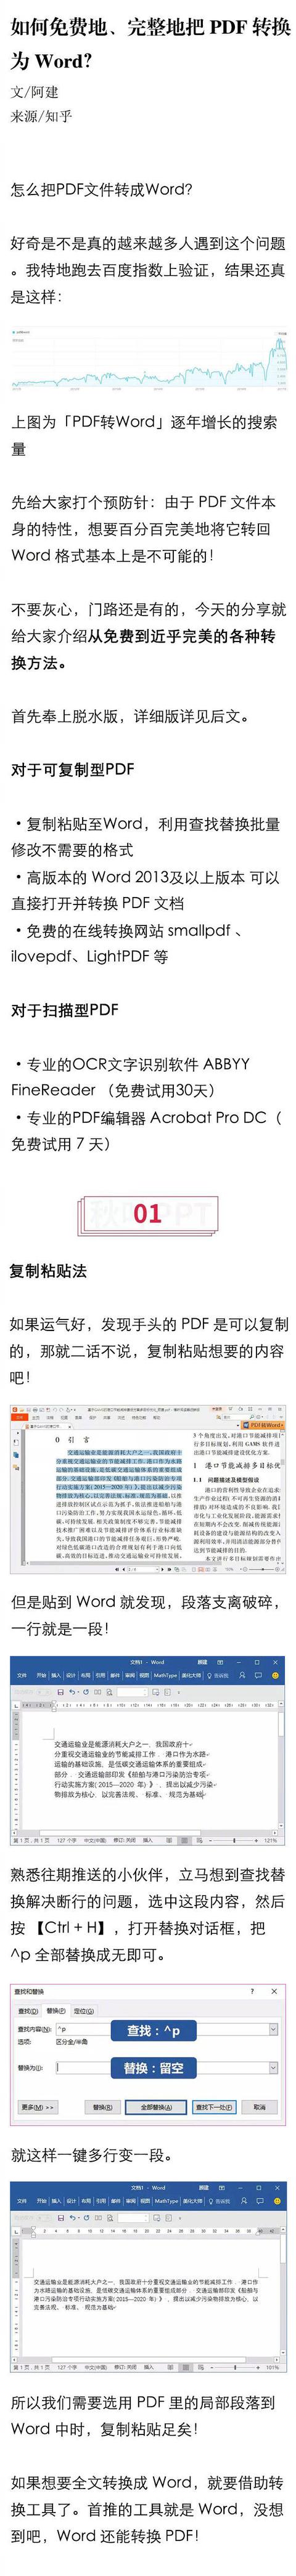 如何免费地、完整地把PDF<a href='https://www.qiaoshan022.cn/tags/zhuanhuanweiWord_2900_1.html' target='_blank'>转换为Word</a>